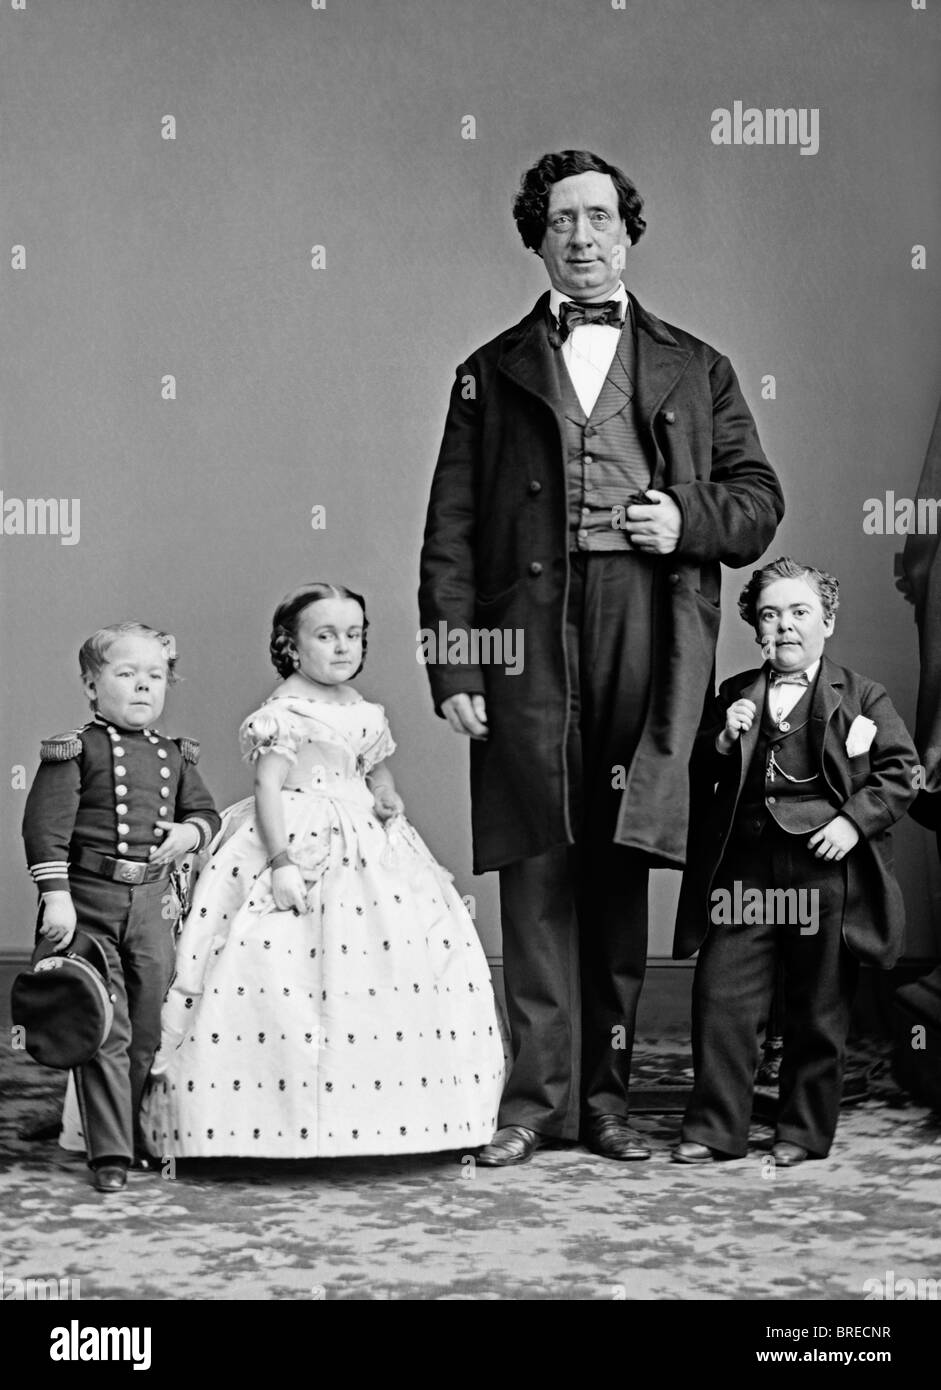 Berühmte Stars der P T Barnum 19. Jahrhundert Shows - Commodore Nutt, Lavinia Warren, nicht identifizierte "Riese" + General Tom Thumb. Stockfoto